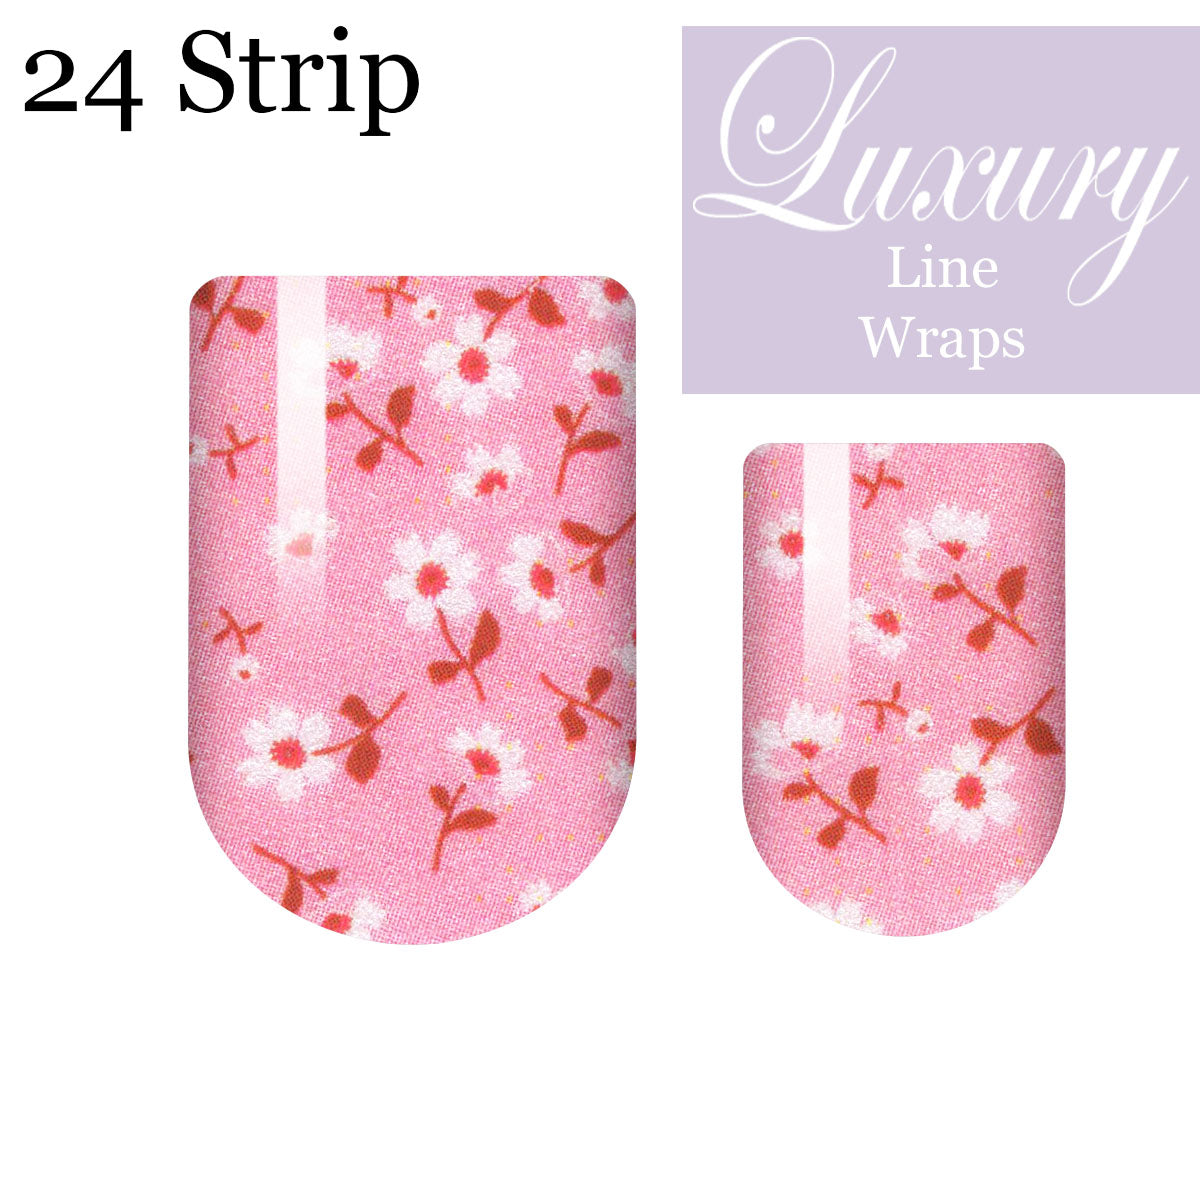 Apple Blossom Luxury Nail Wrap